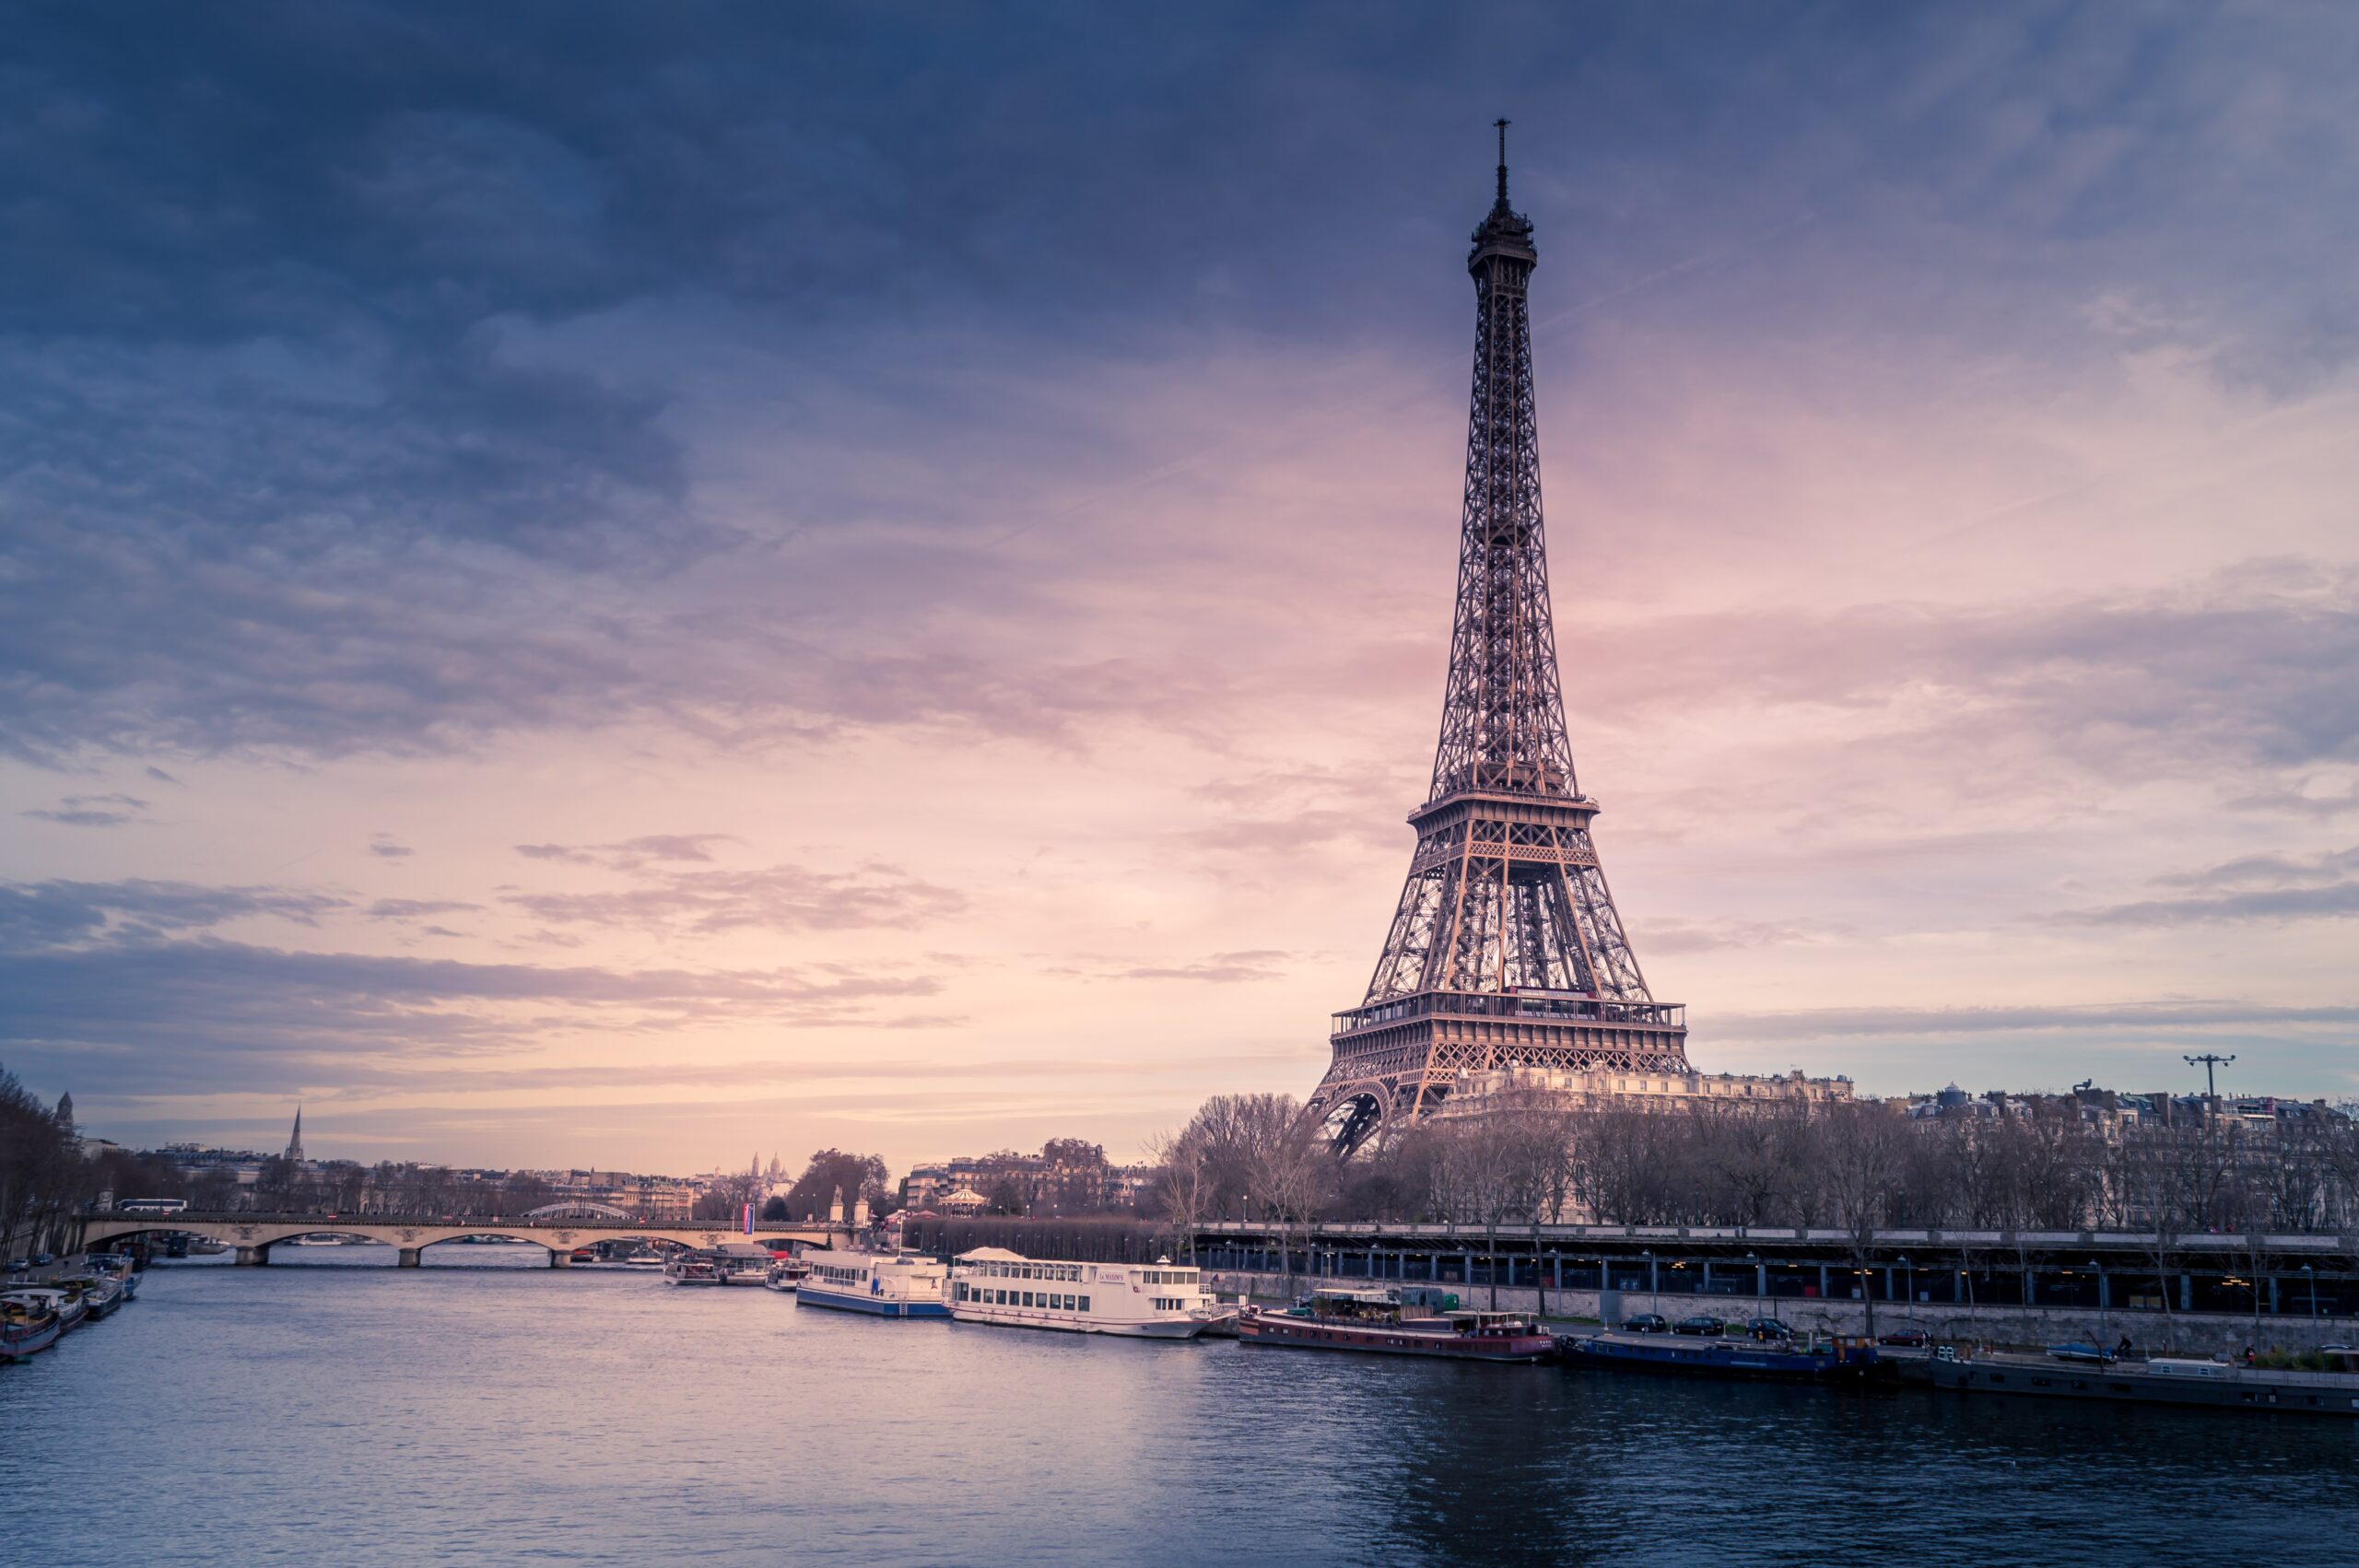 Paris: The City of Lights and Romance